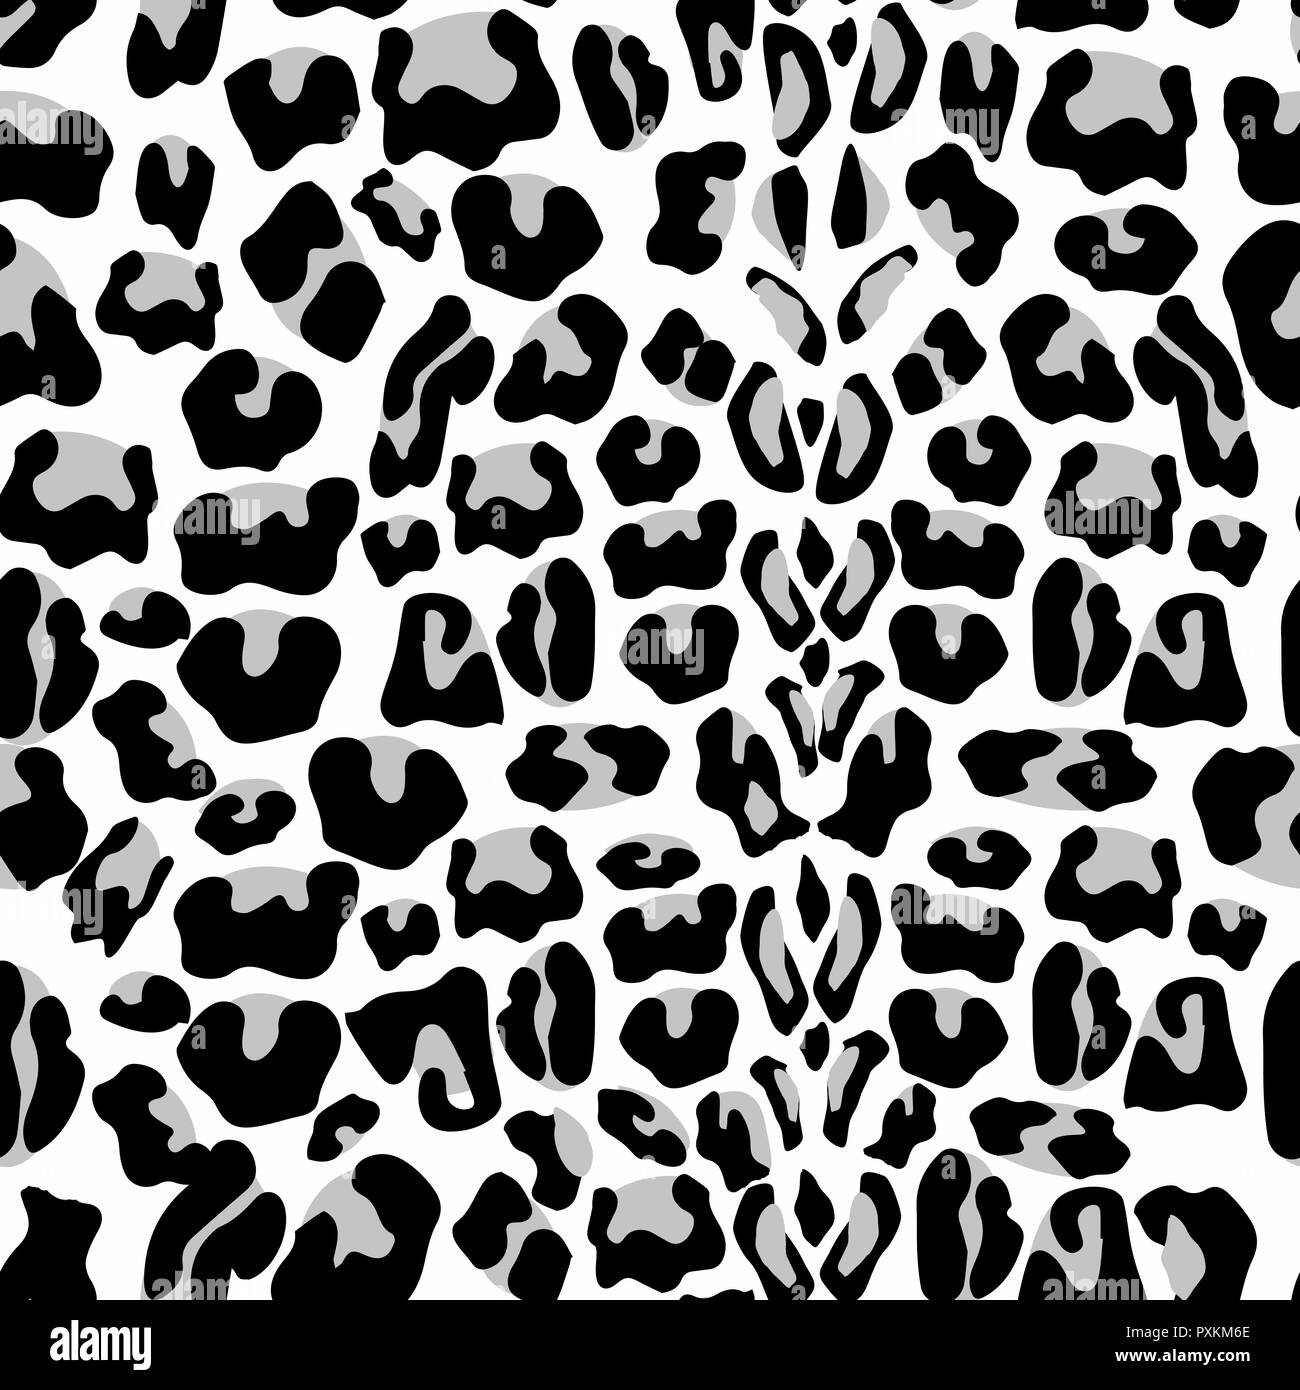 Leopard Print Background Stock Illustrations  46960 Leopard Print  Background Stock Illustrations Vectors  Clipart  Dreamstime